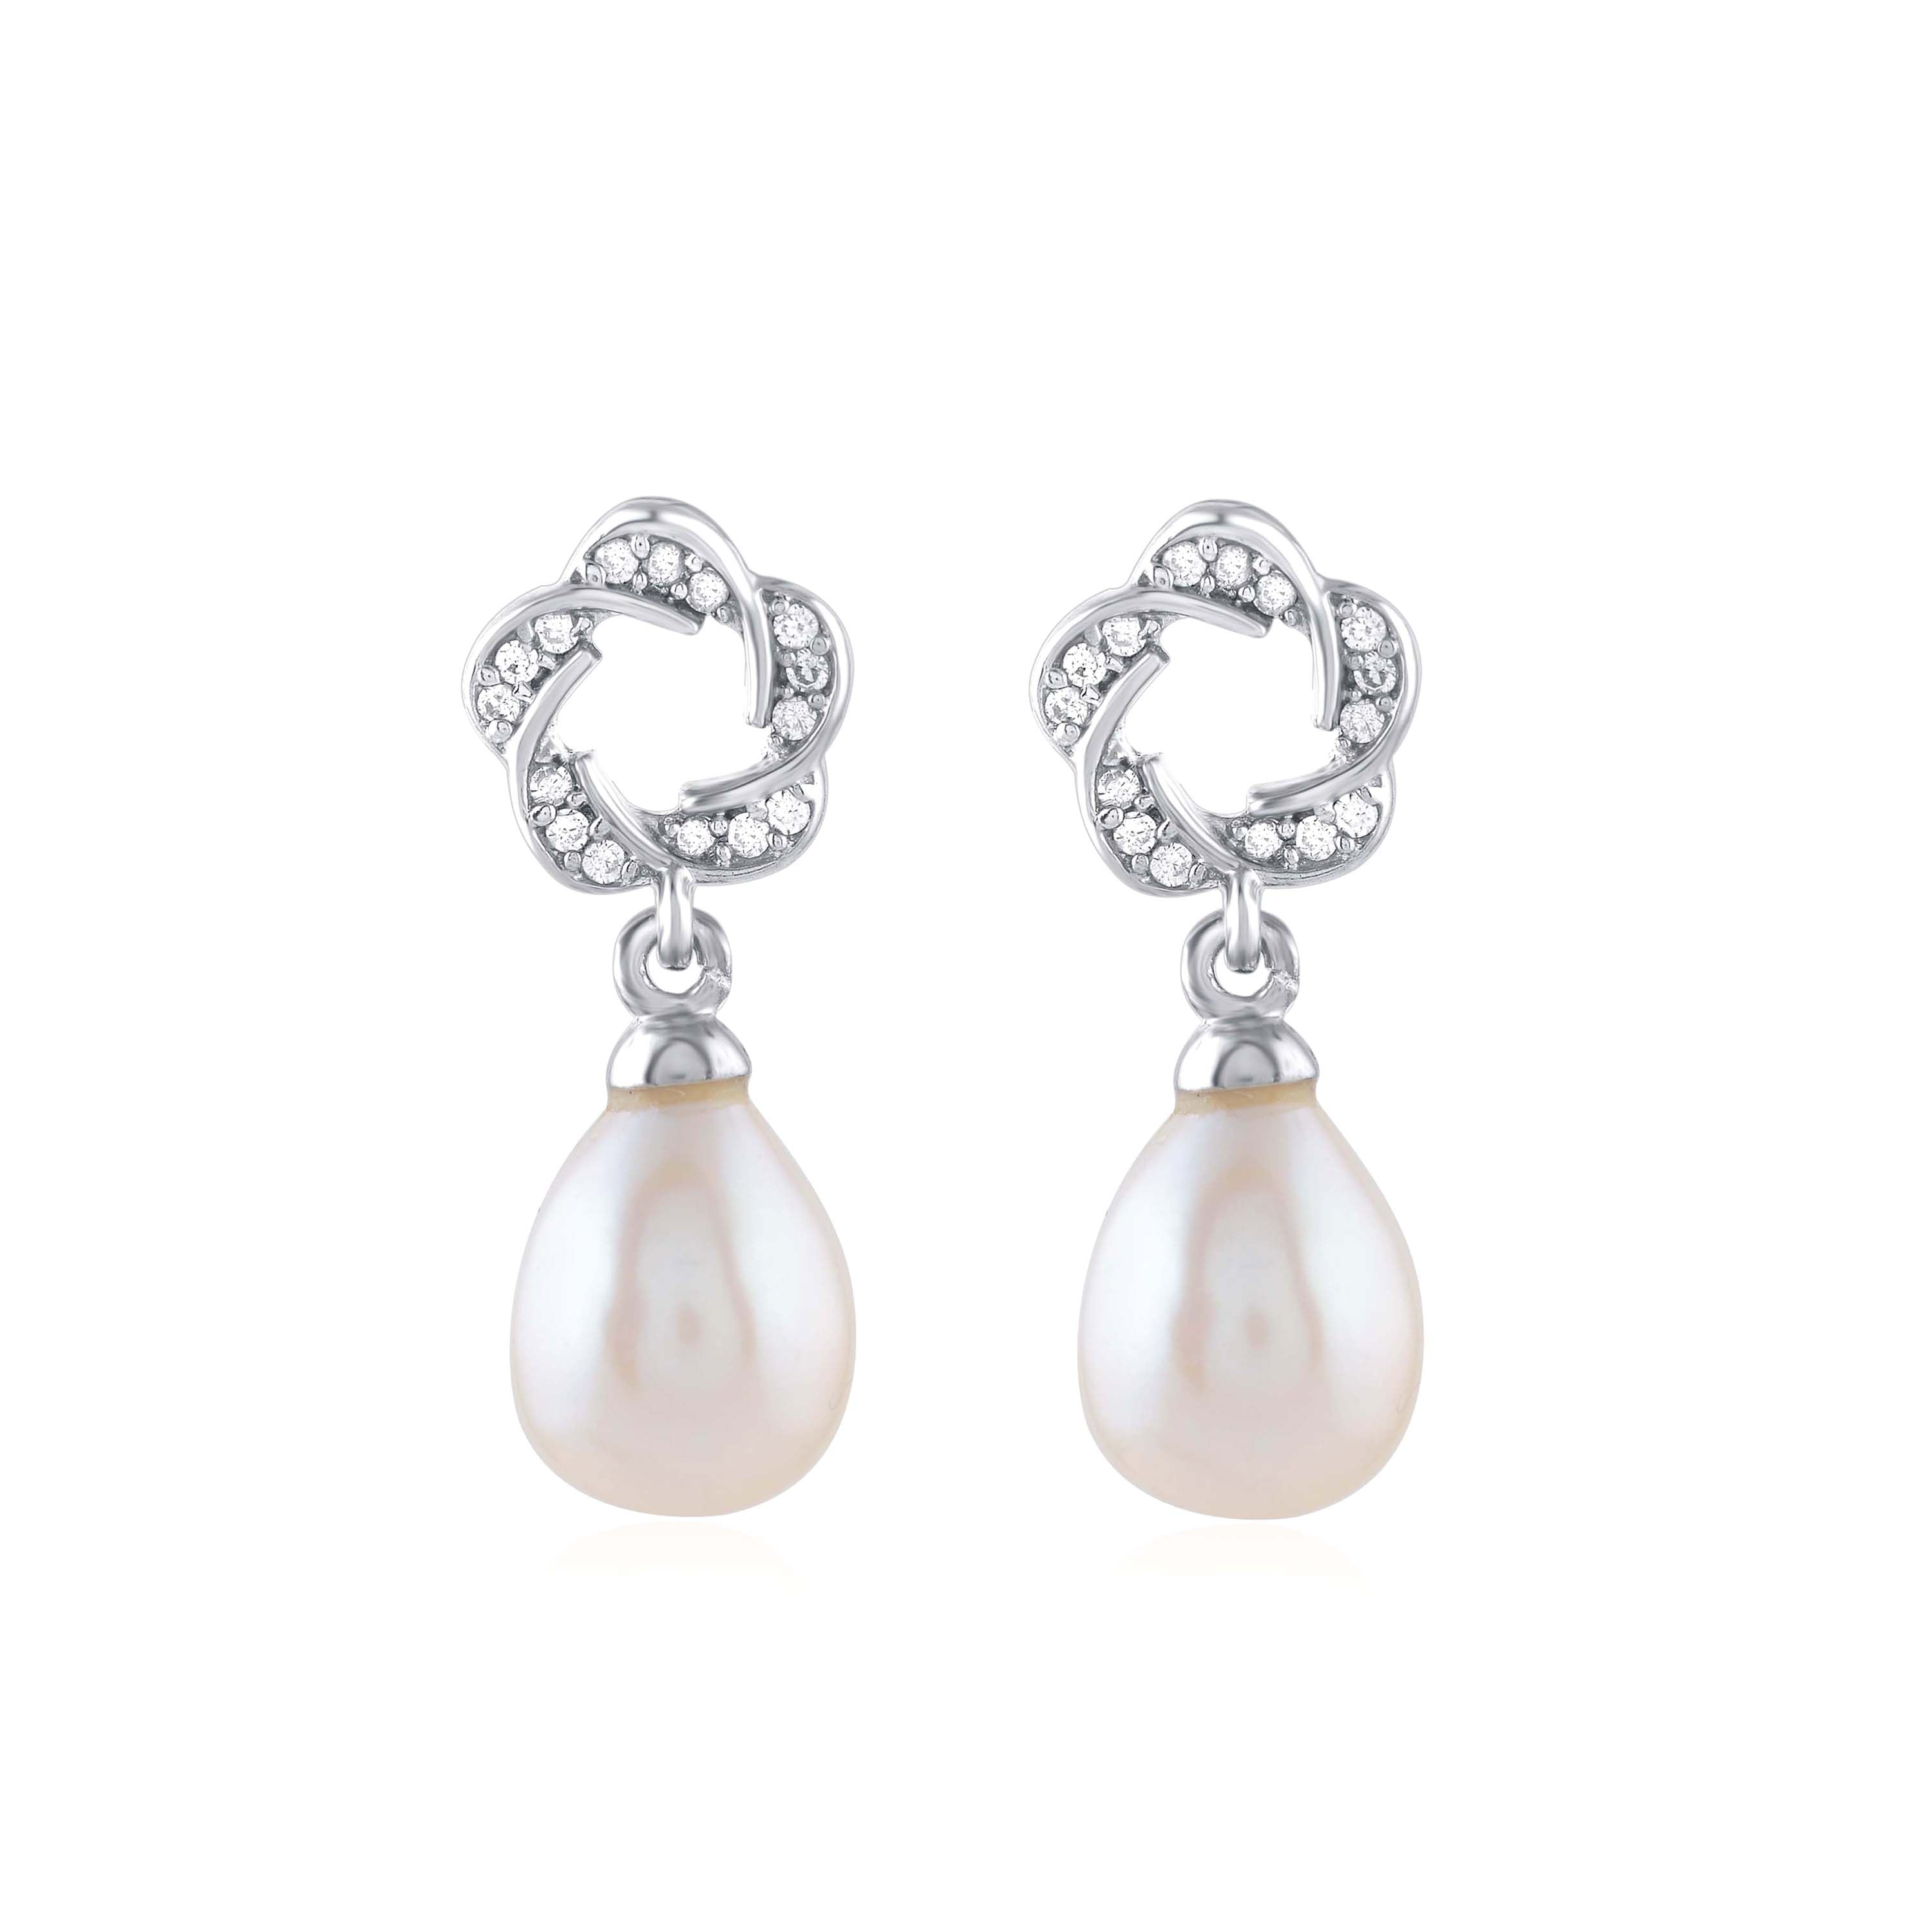 Elegant and Stunning Silver Pearl Drop Earrings